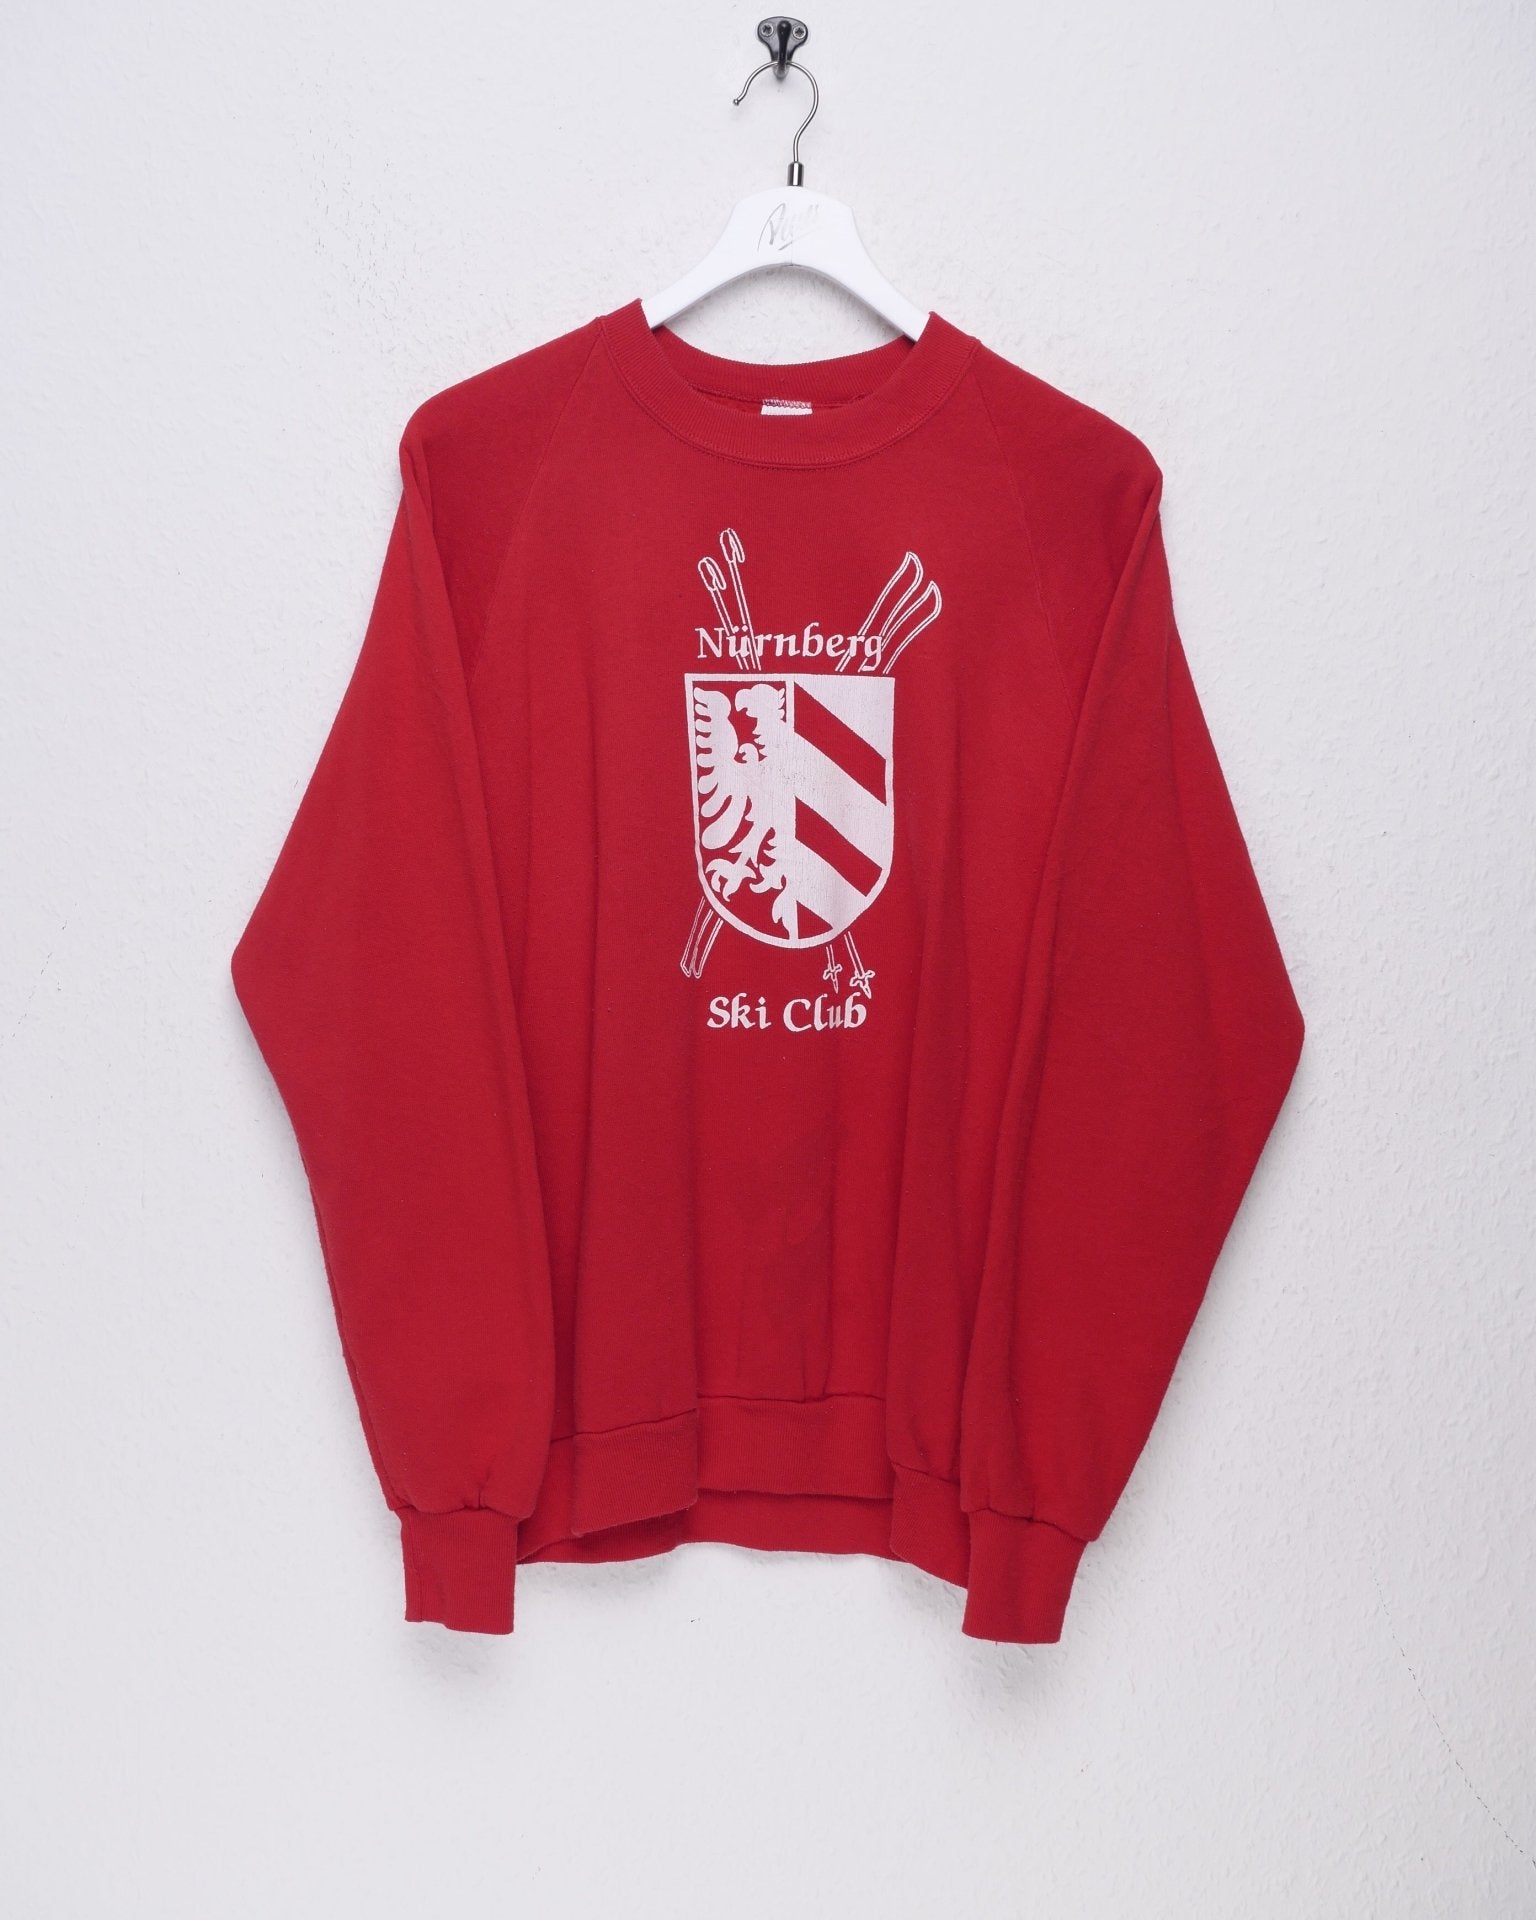 'Nürnberg Ski Club' printed Graphic red Sweater - Peeces